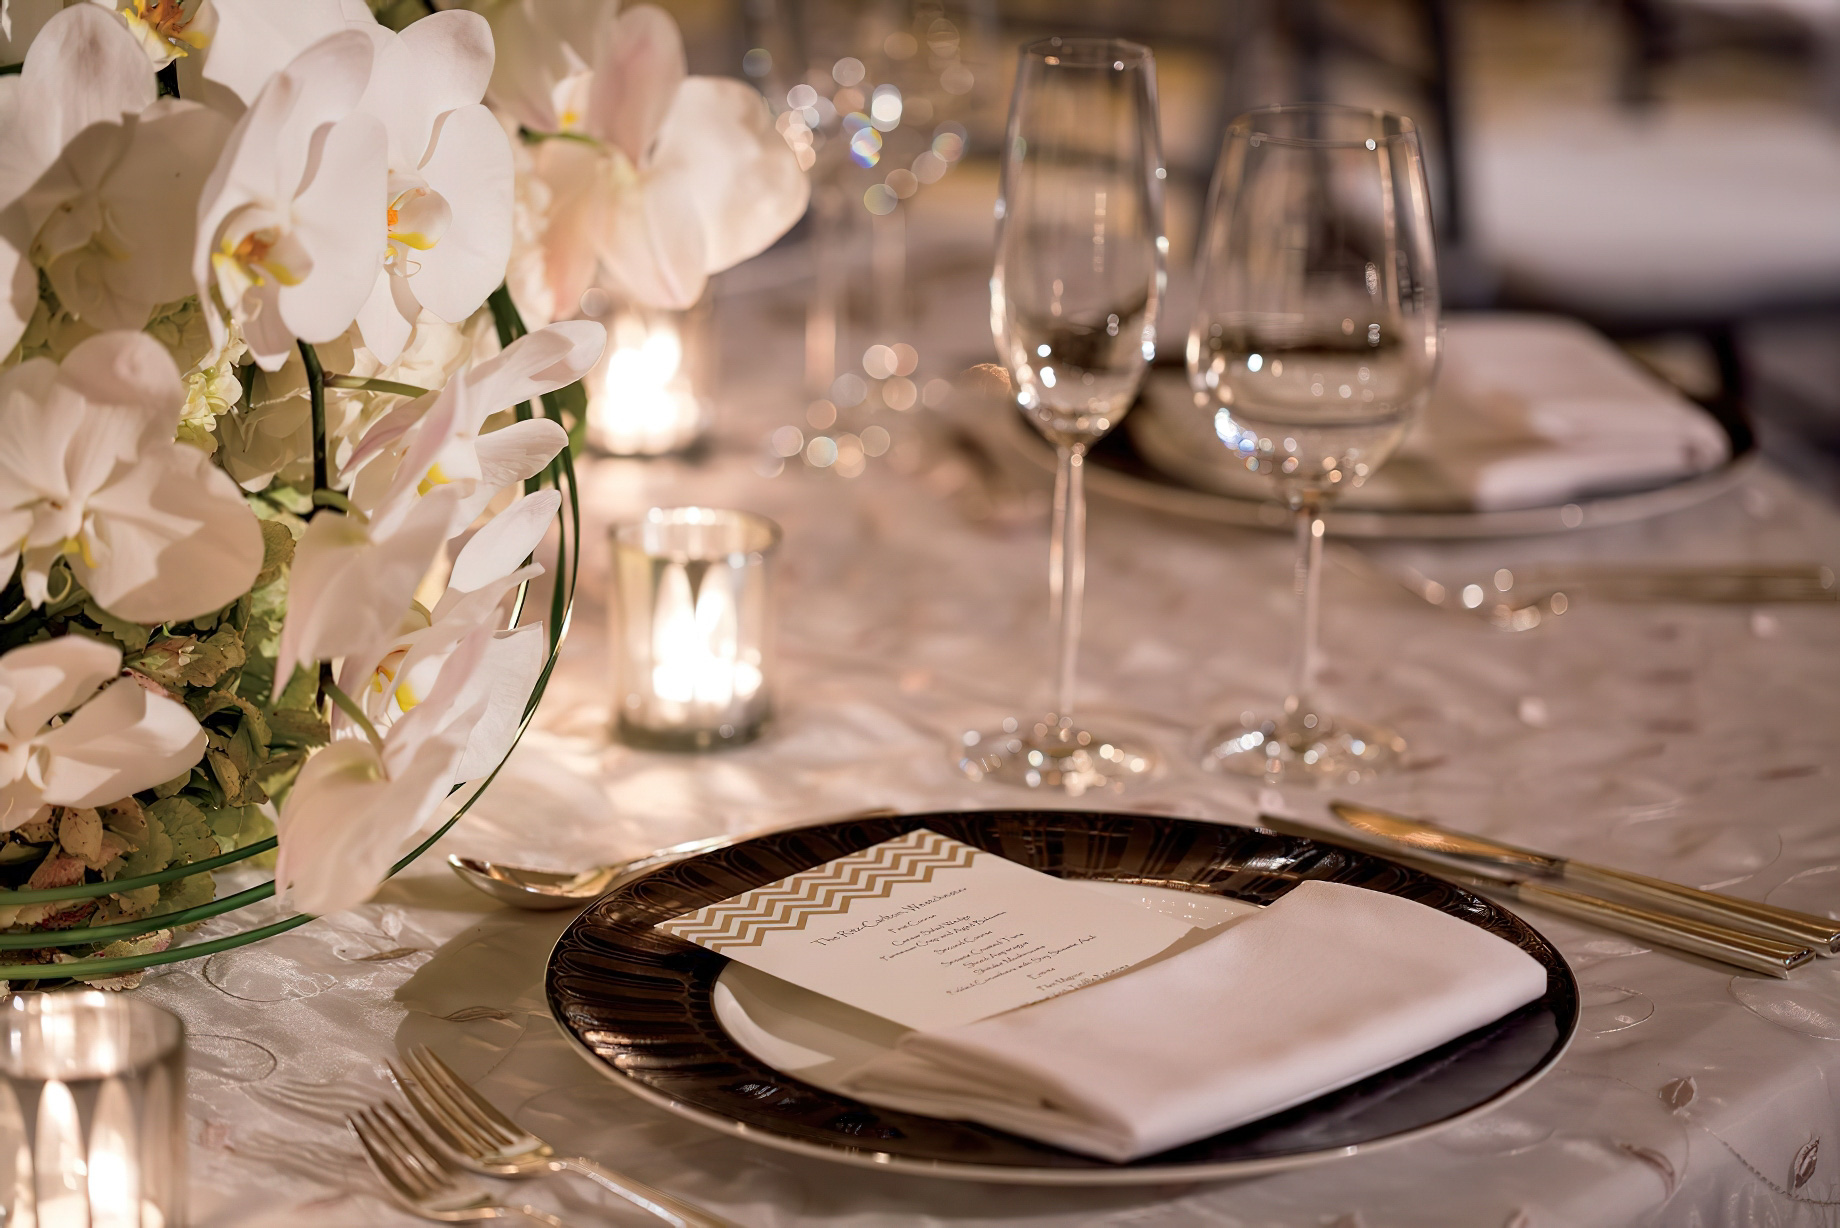 The Ritz-Carlton, Tysons Corner Hotel - McLean, VA, USA - Ballroom Wedding Table Setting